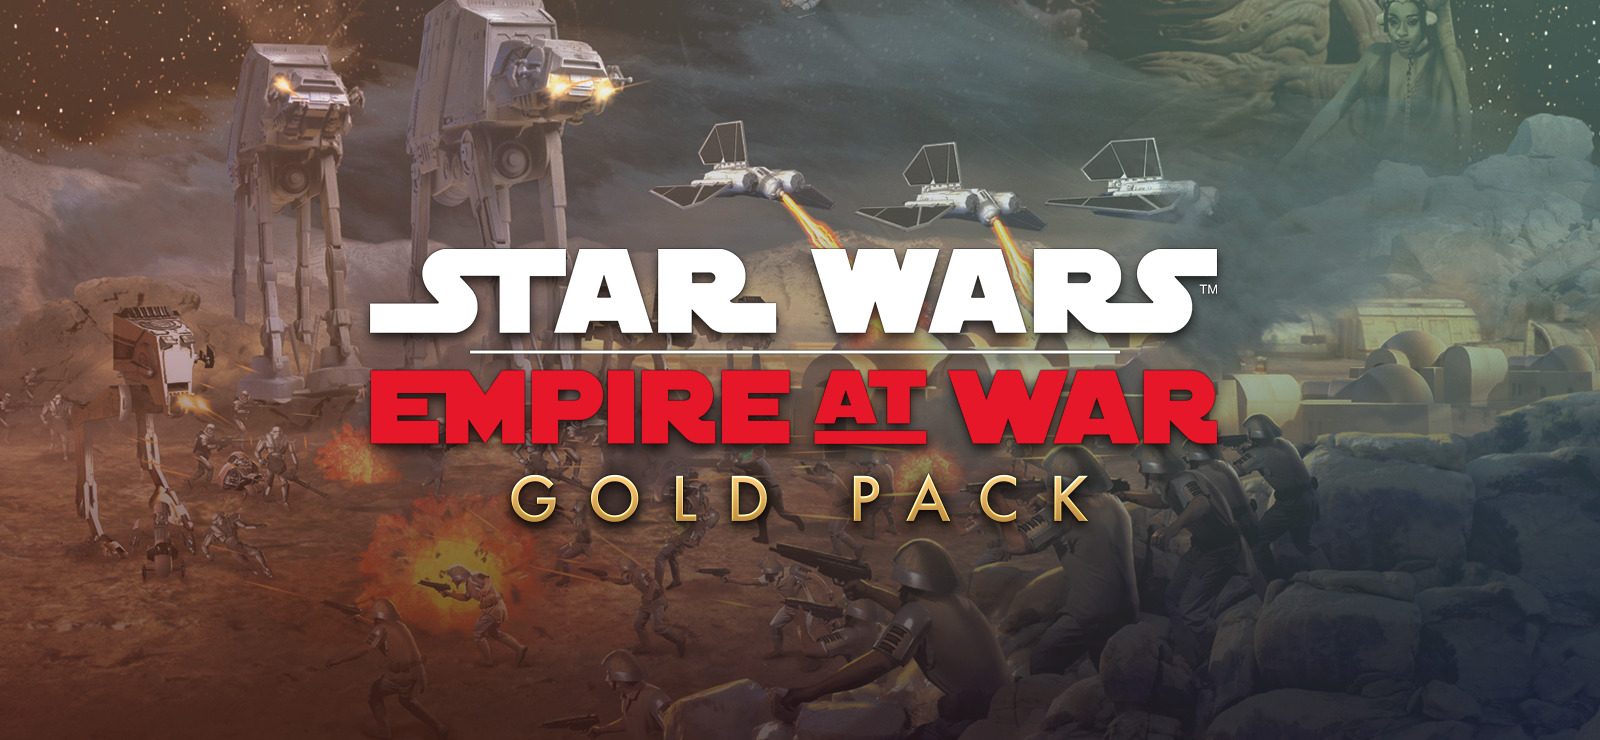 STAR WARS Empire at War – Gold Pack iOS/APK Download